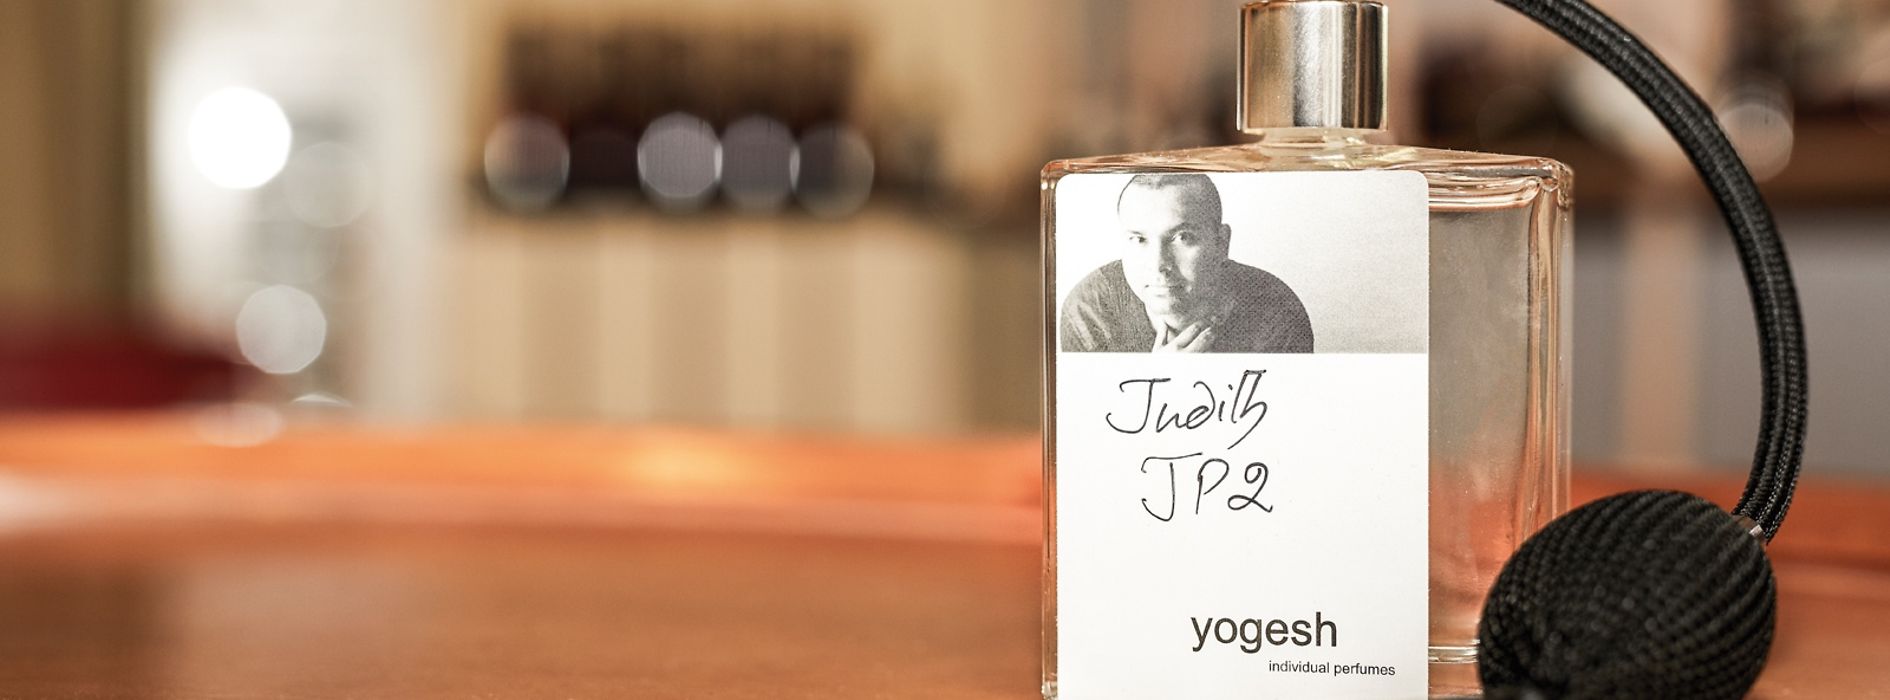 Parfums yogesh, flacon